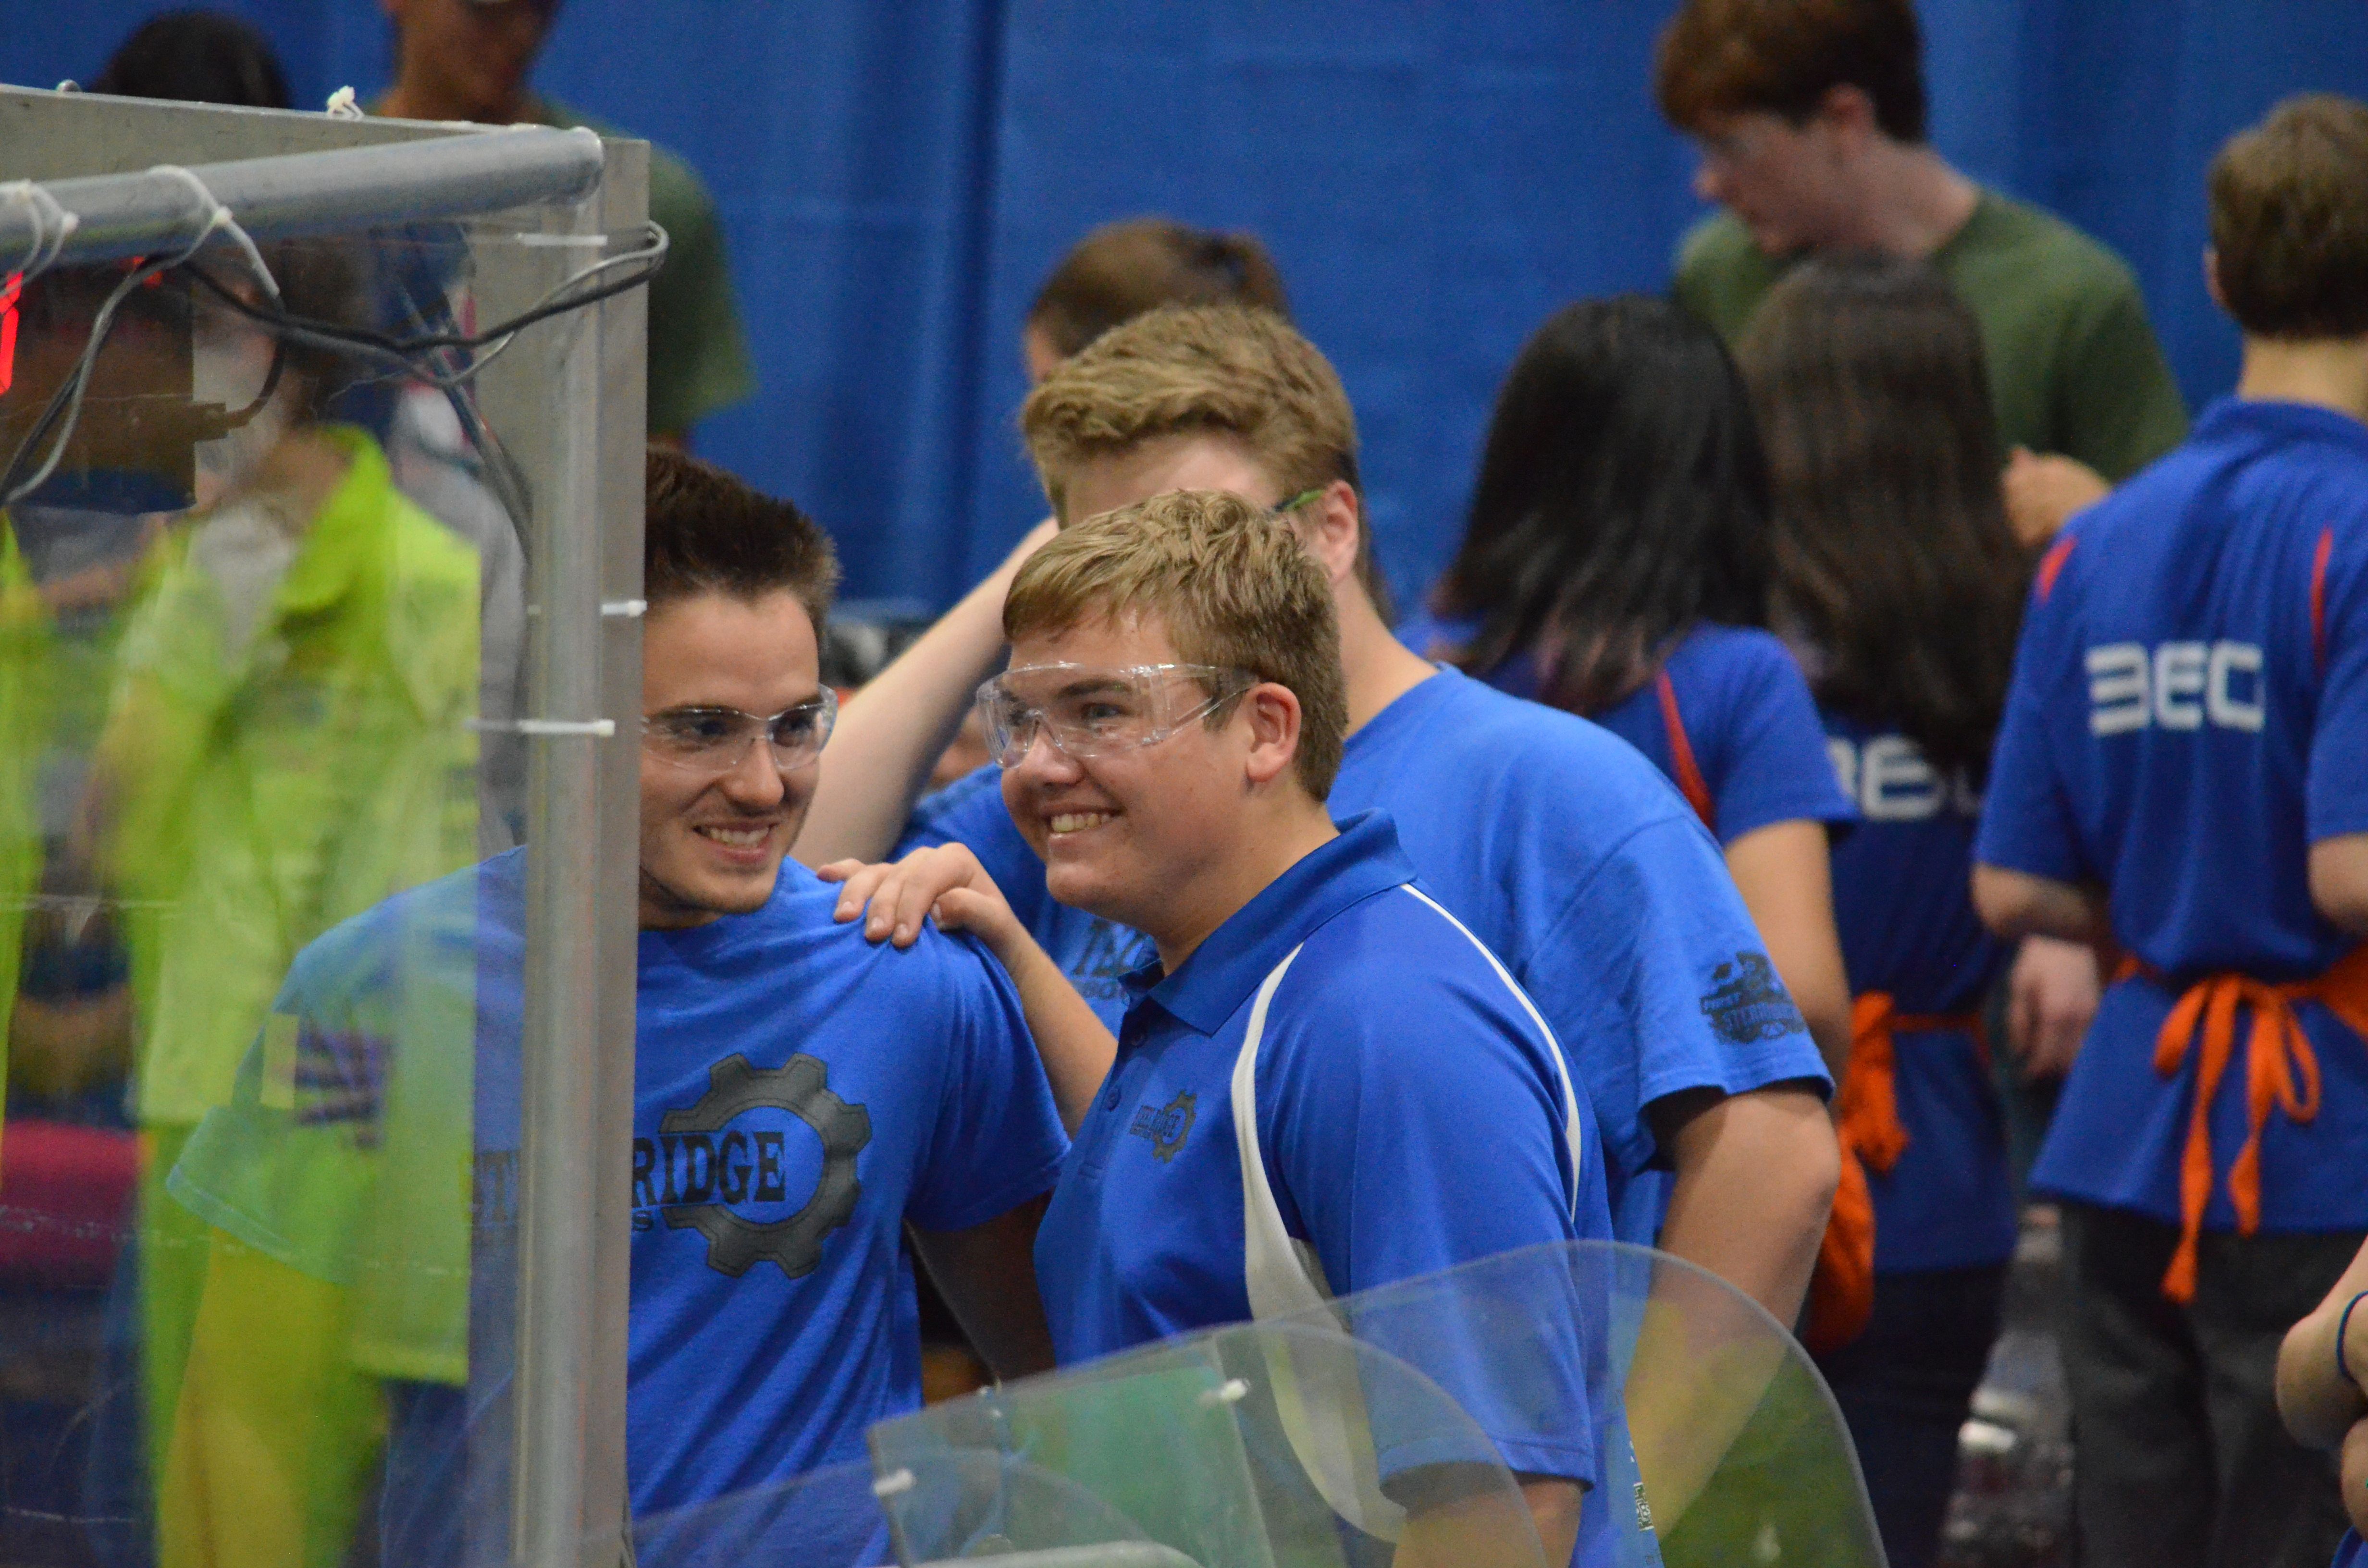 Ridgefield High School's Robotics Team Gears Up for New Season